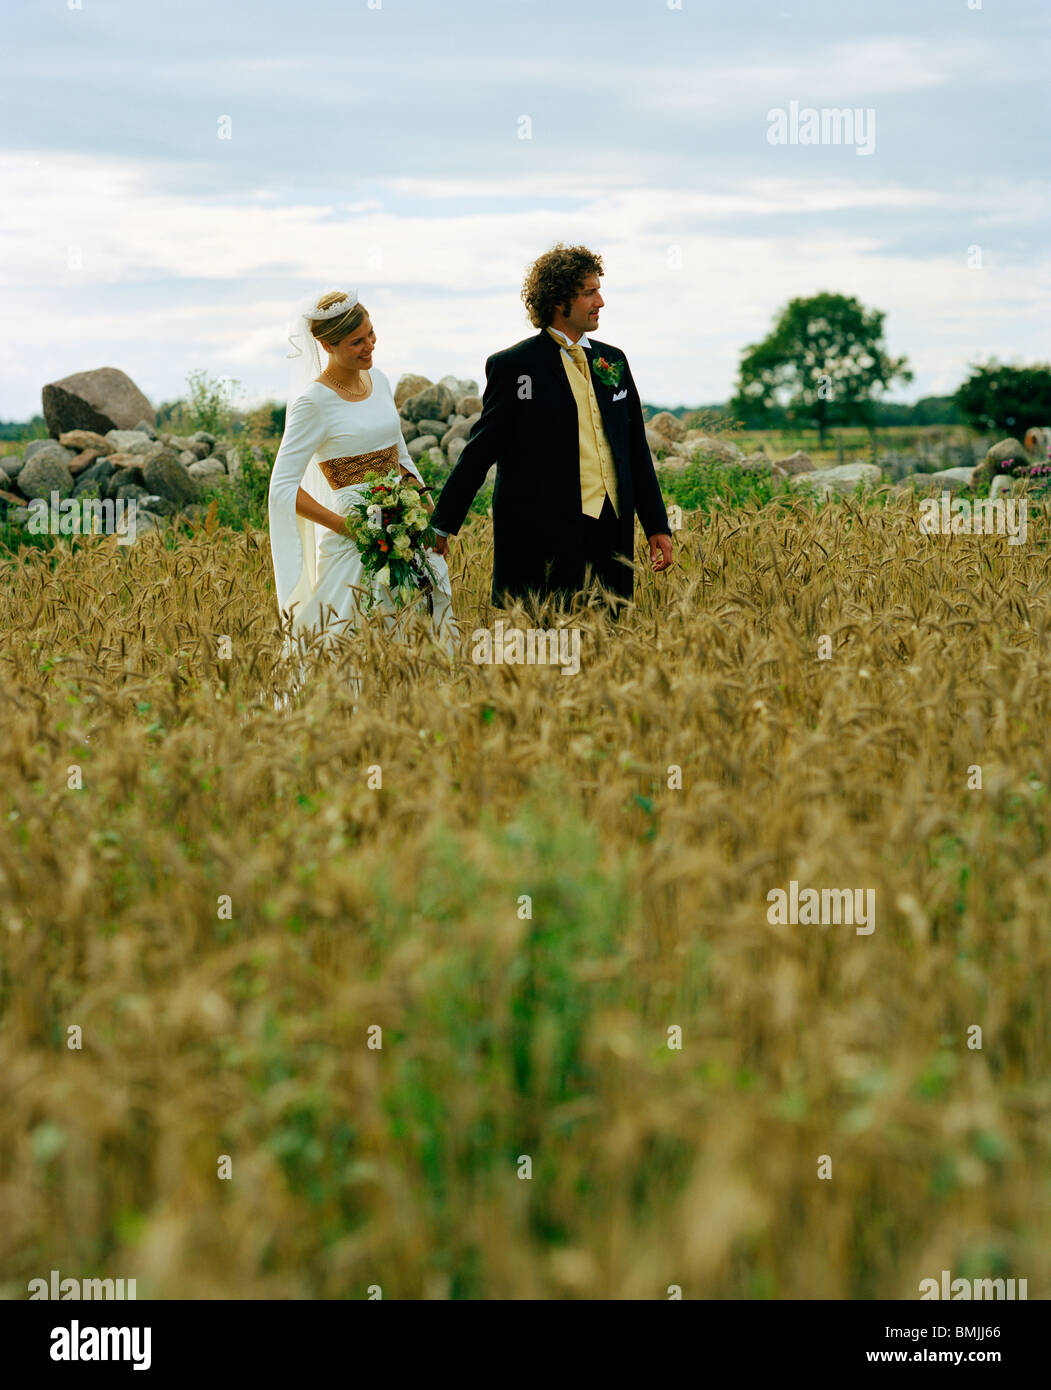 Scandinavia, Sweden, Oland, Bride and groom walking in field Stock Photo